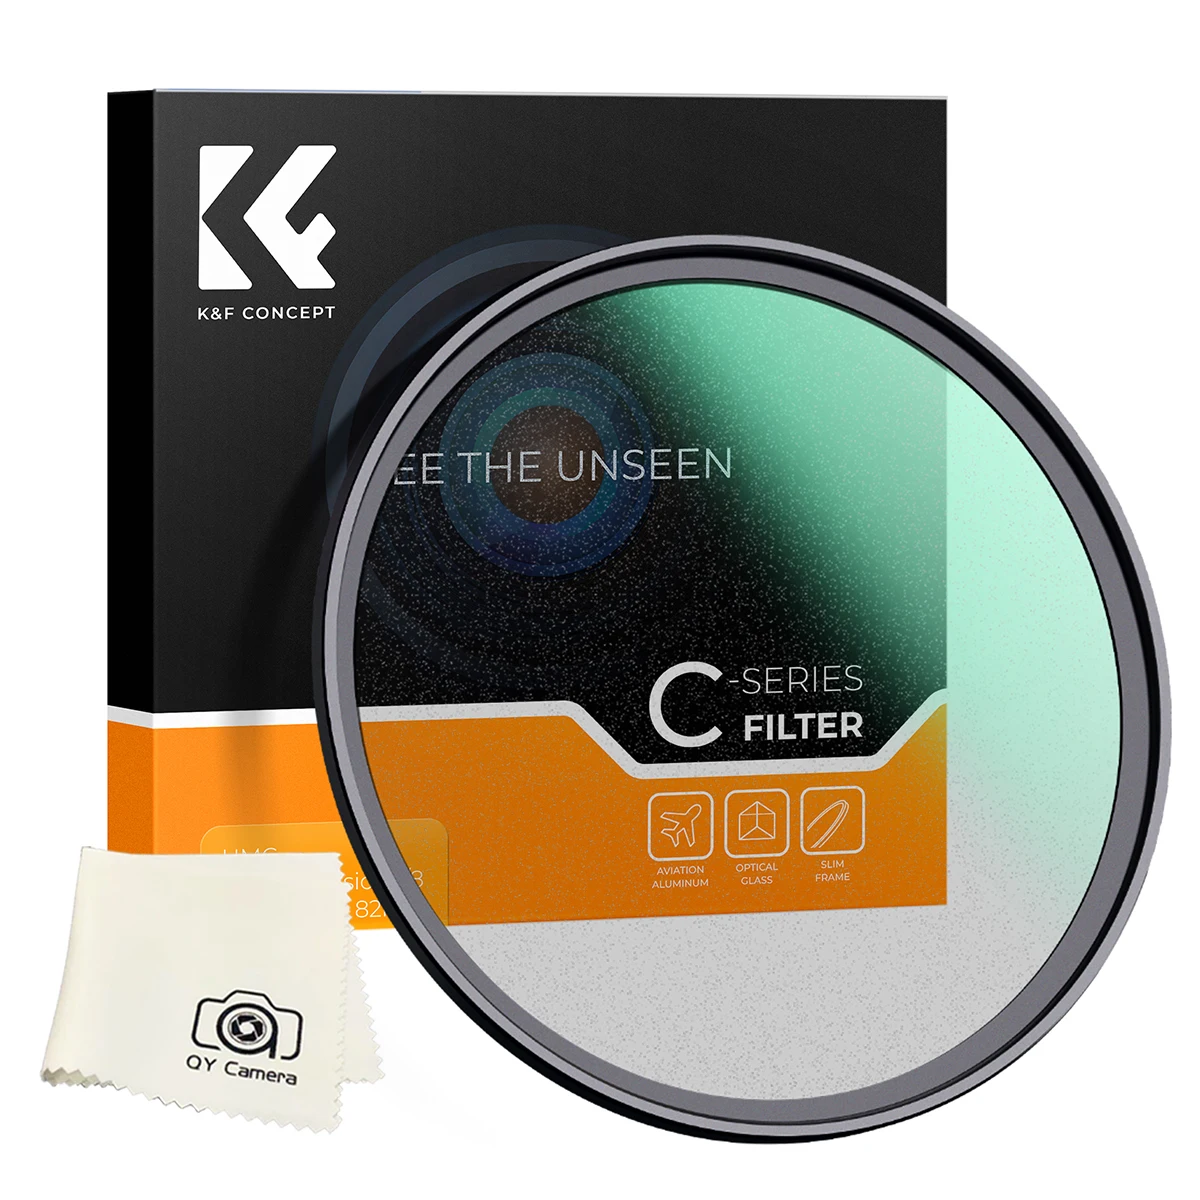 

K&F Concept Lens Diffusion Filter 55mm 1/8 Black Pro Mist Antireflective Coating Sigma 56mm F1.4 E C Series